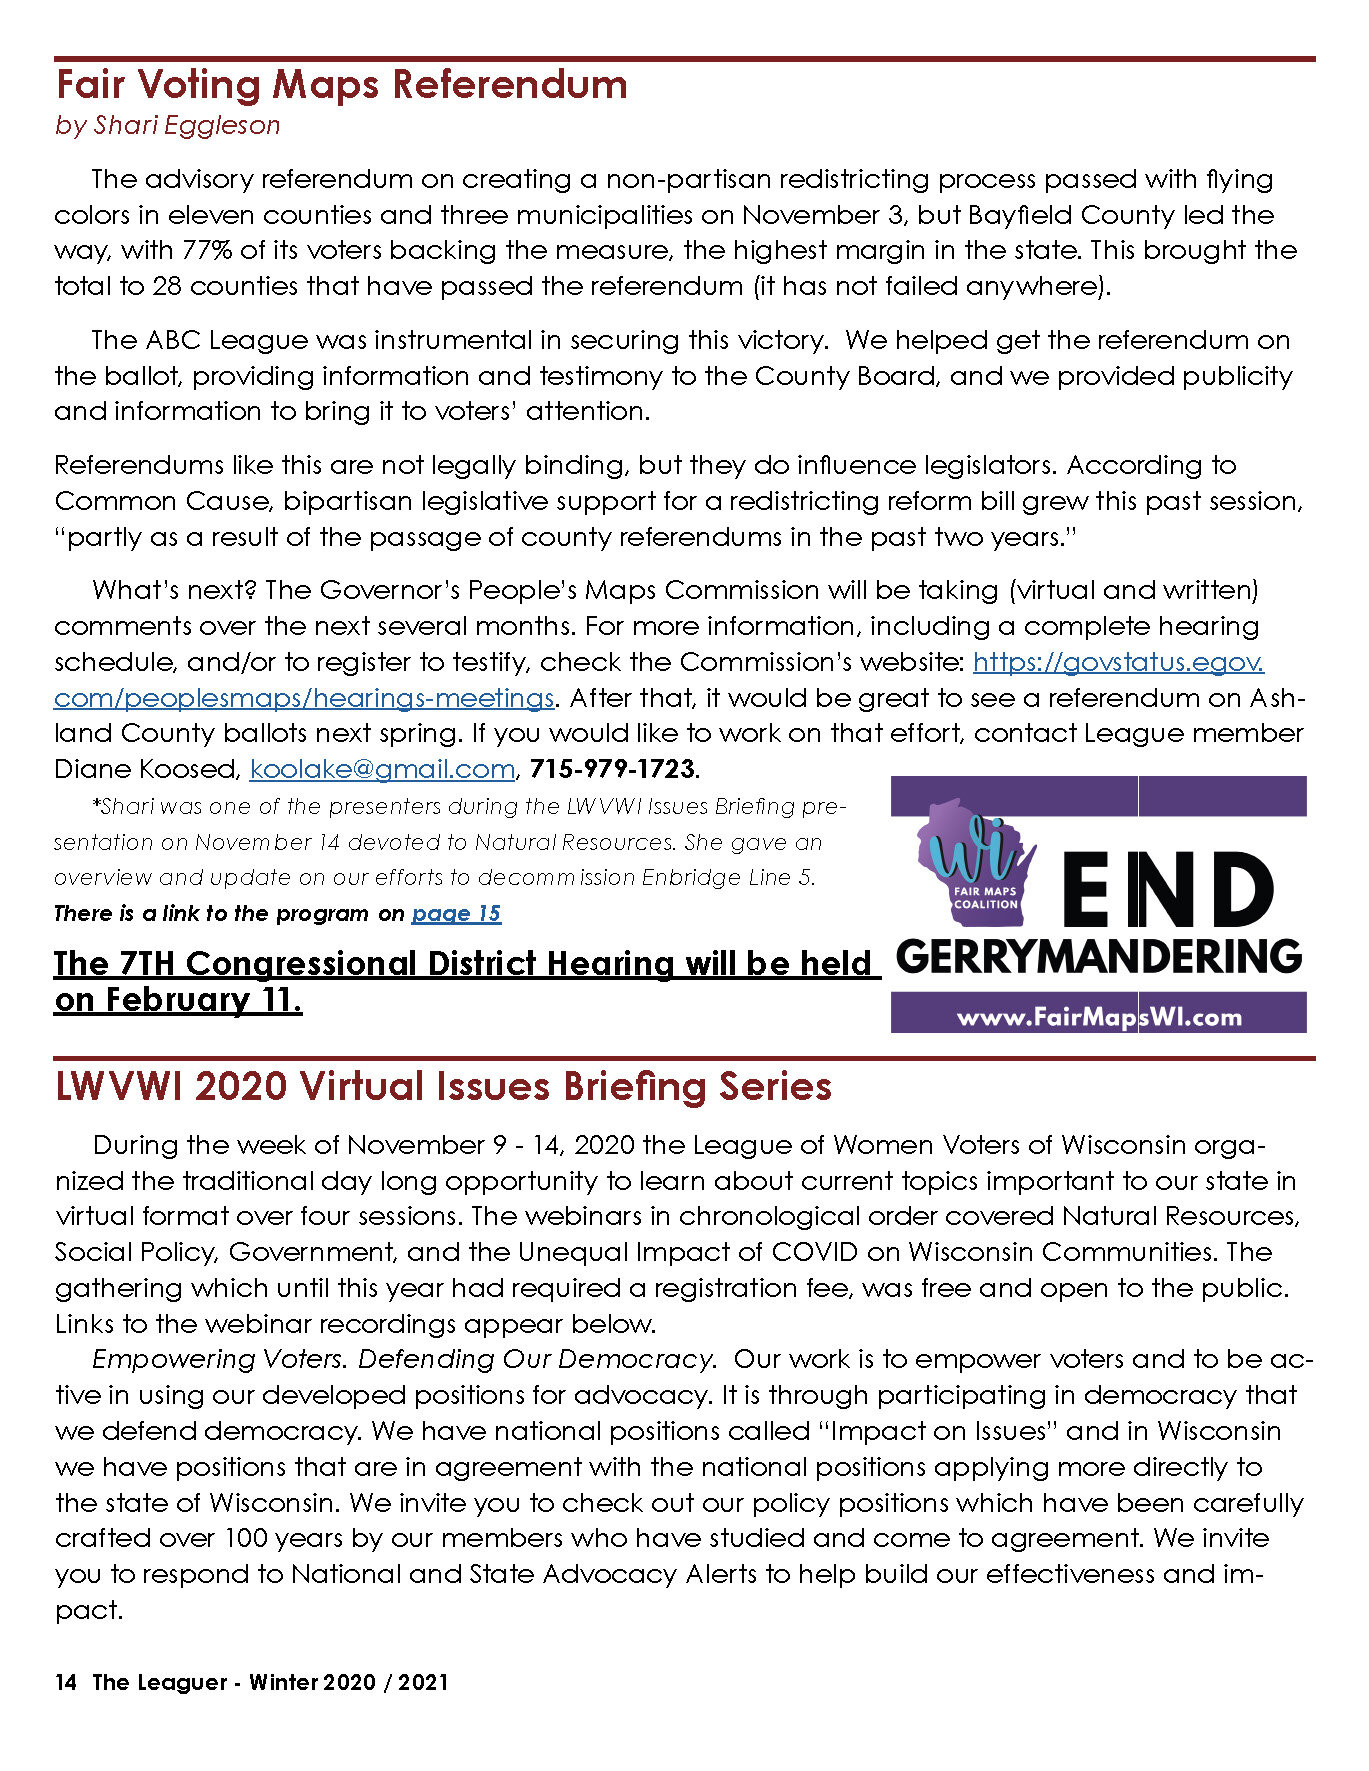 LWV Newsletter Winter 2020_Page_14.jpg